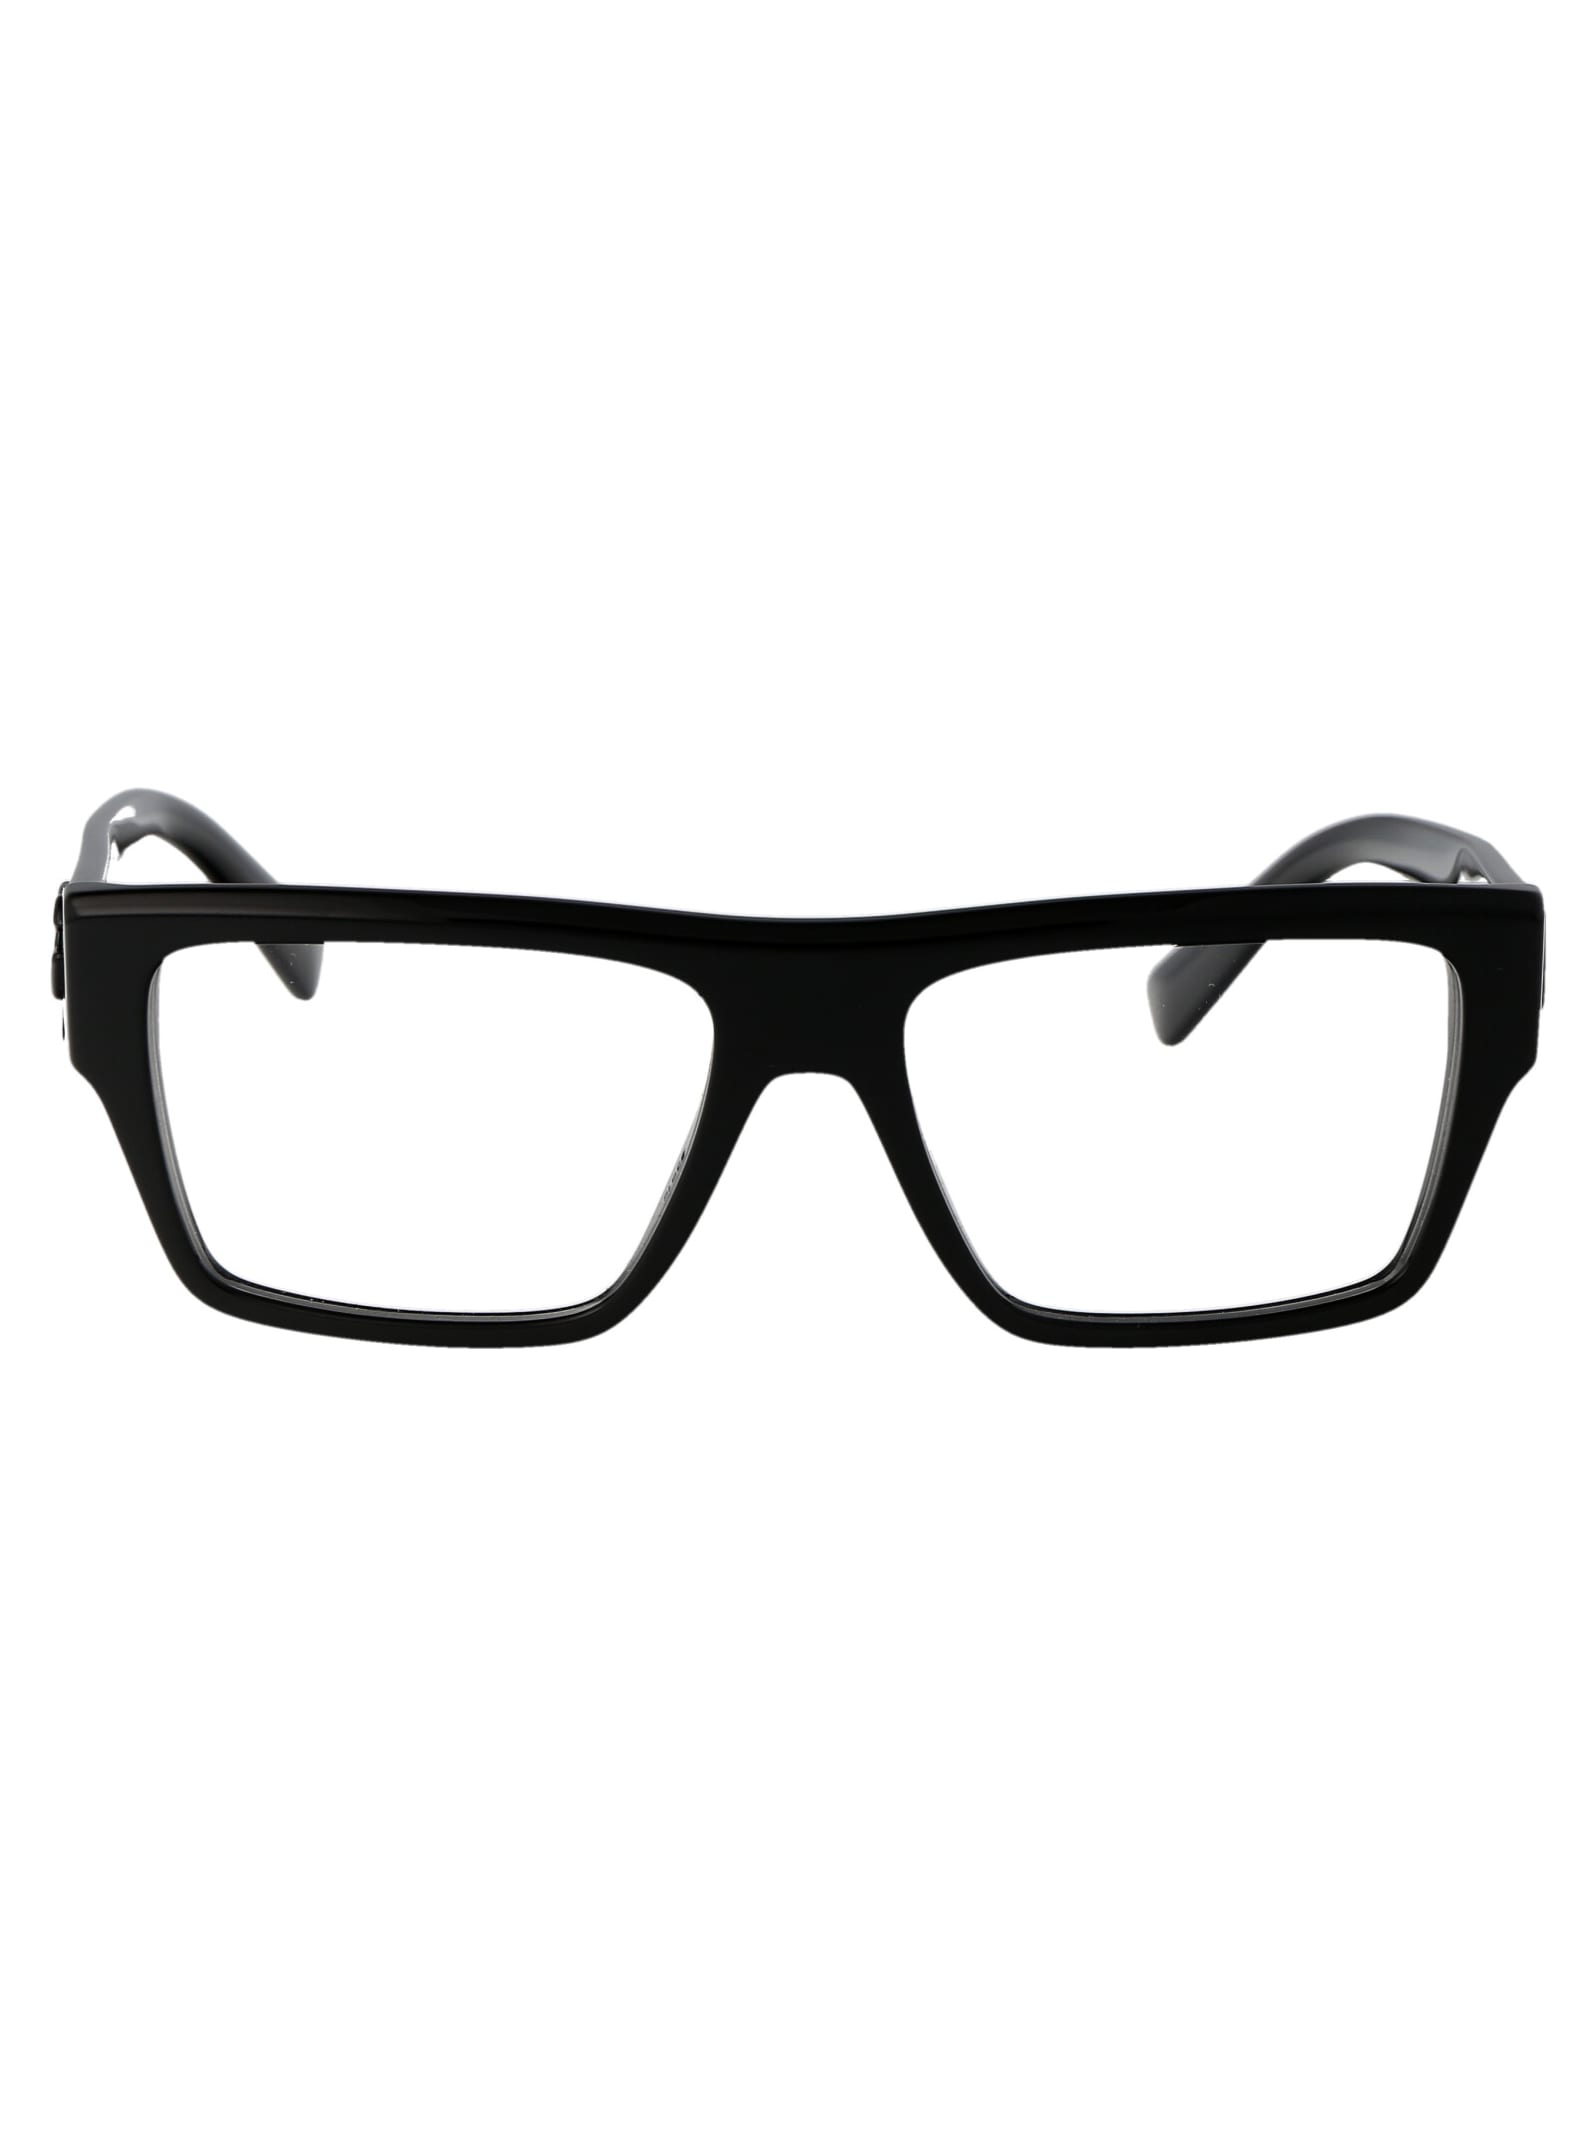 0dg3382 Glasses